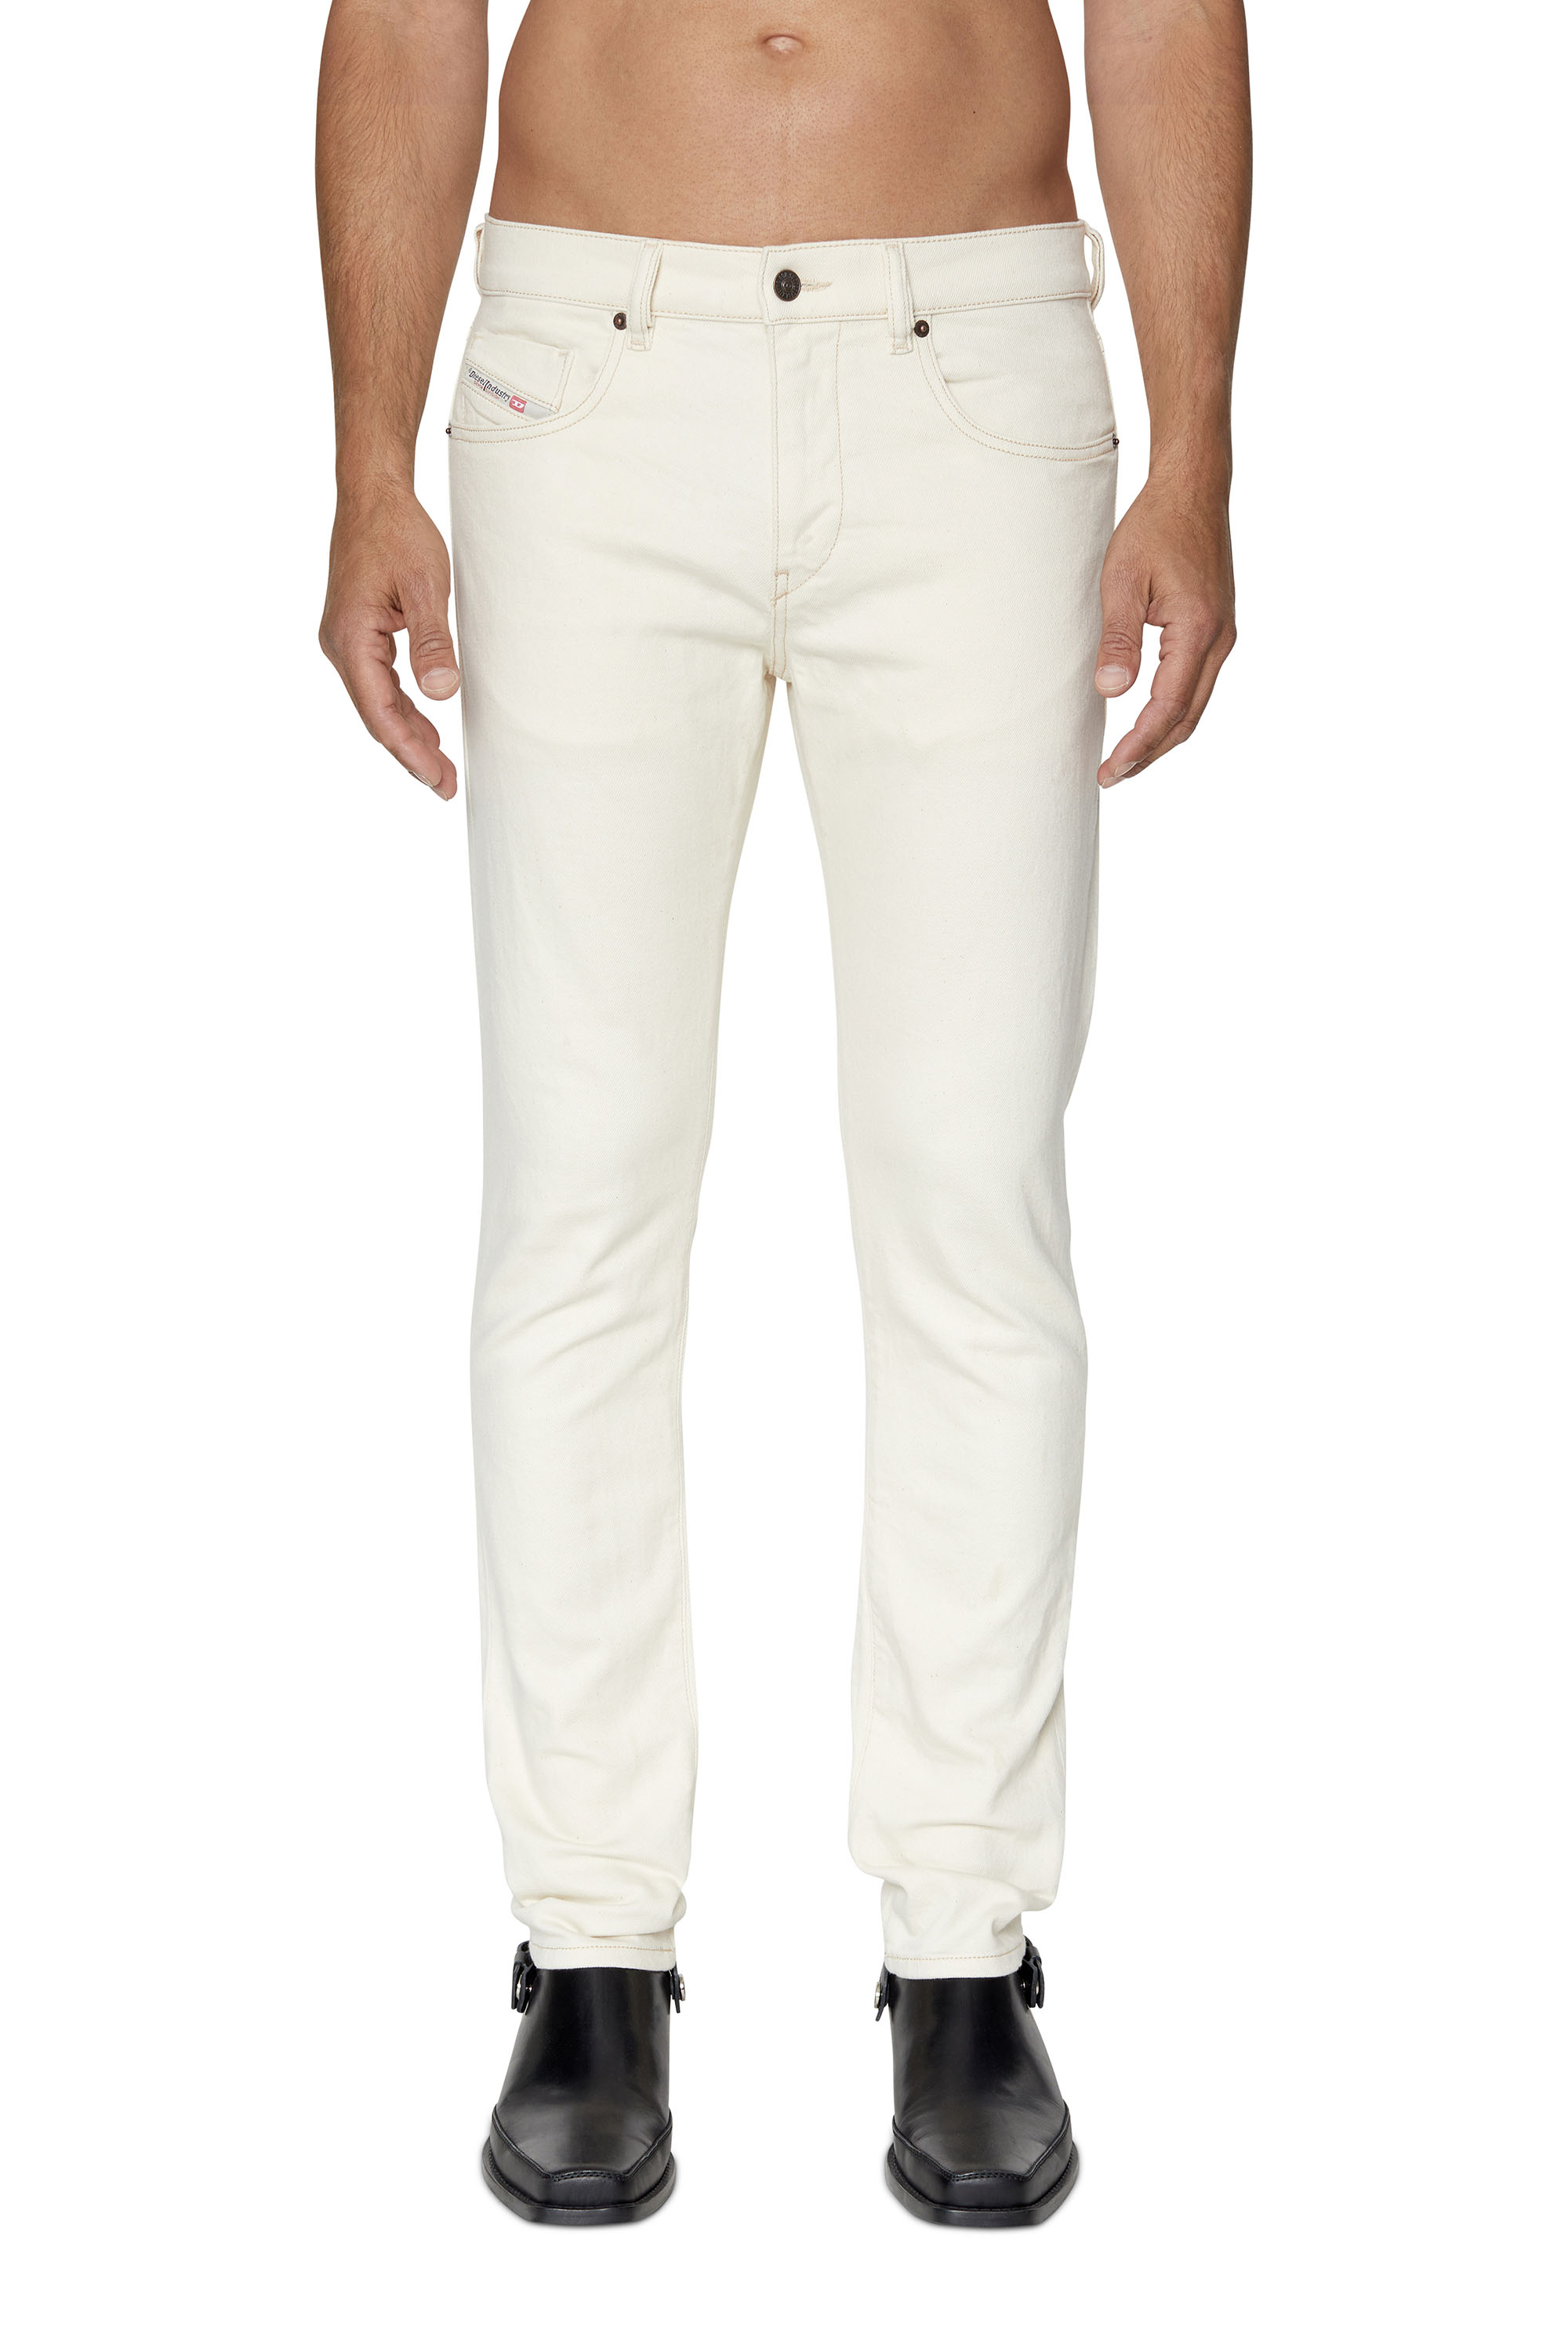 2019 D-STRUKT 09B94 Slim Jeans, White - Jeans